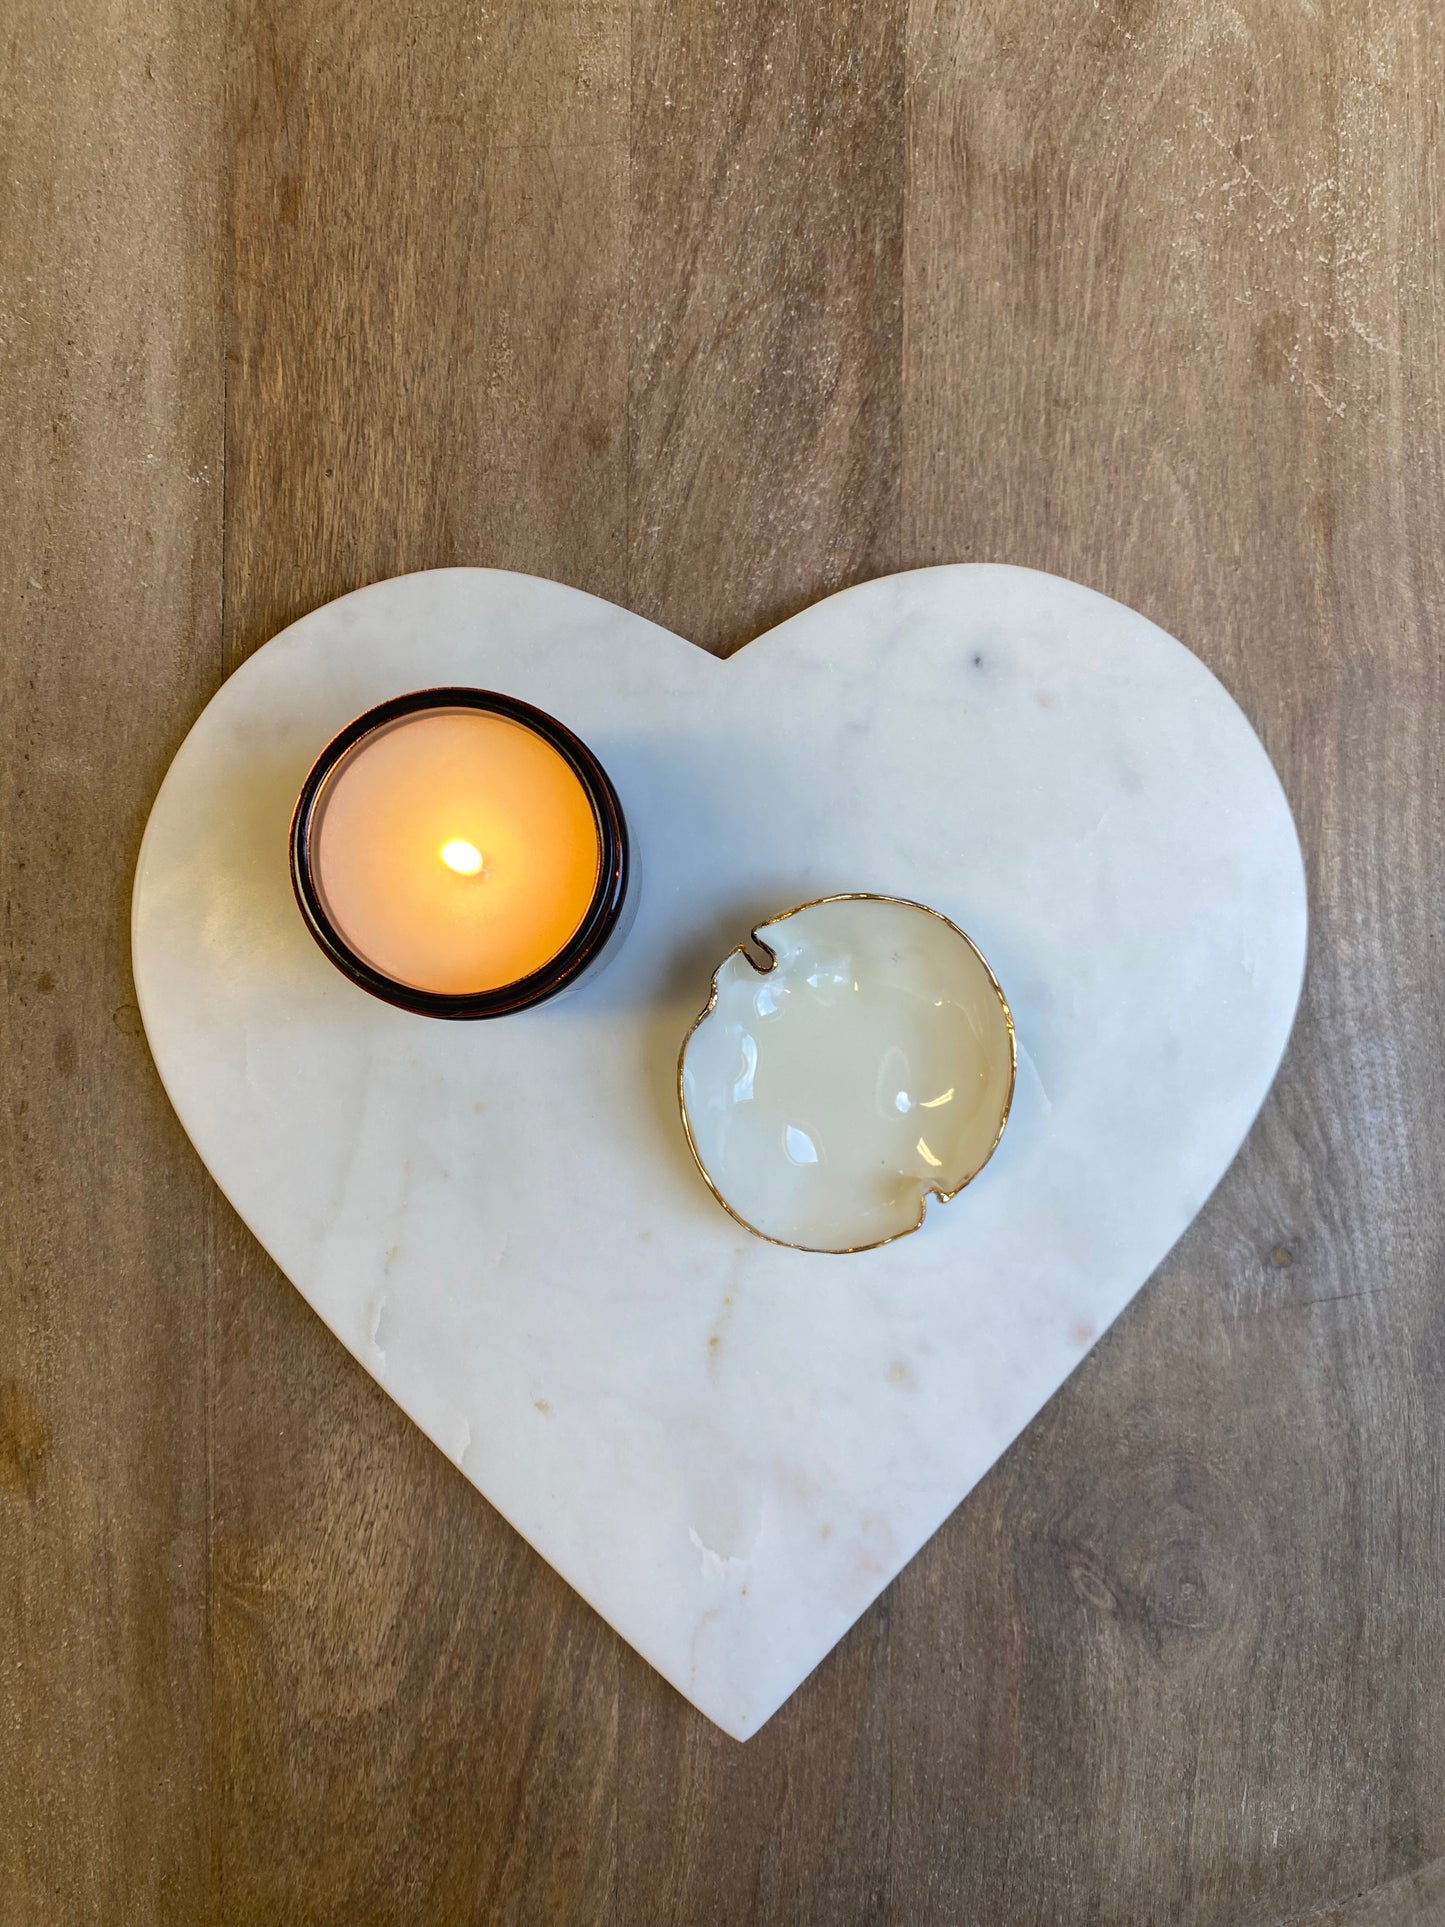 White marble heart-shaped board